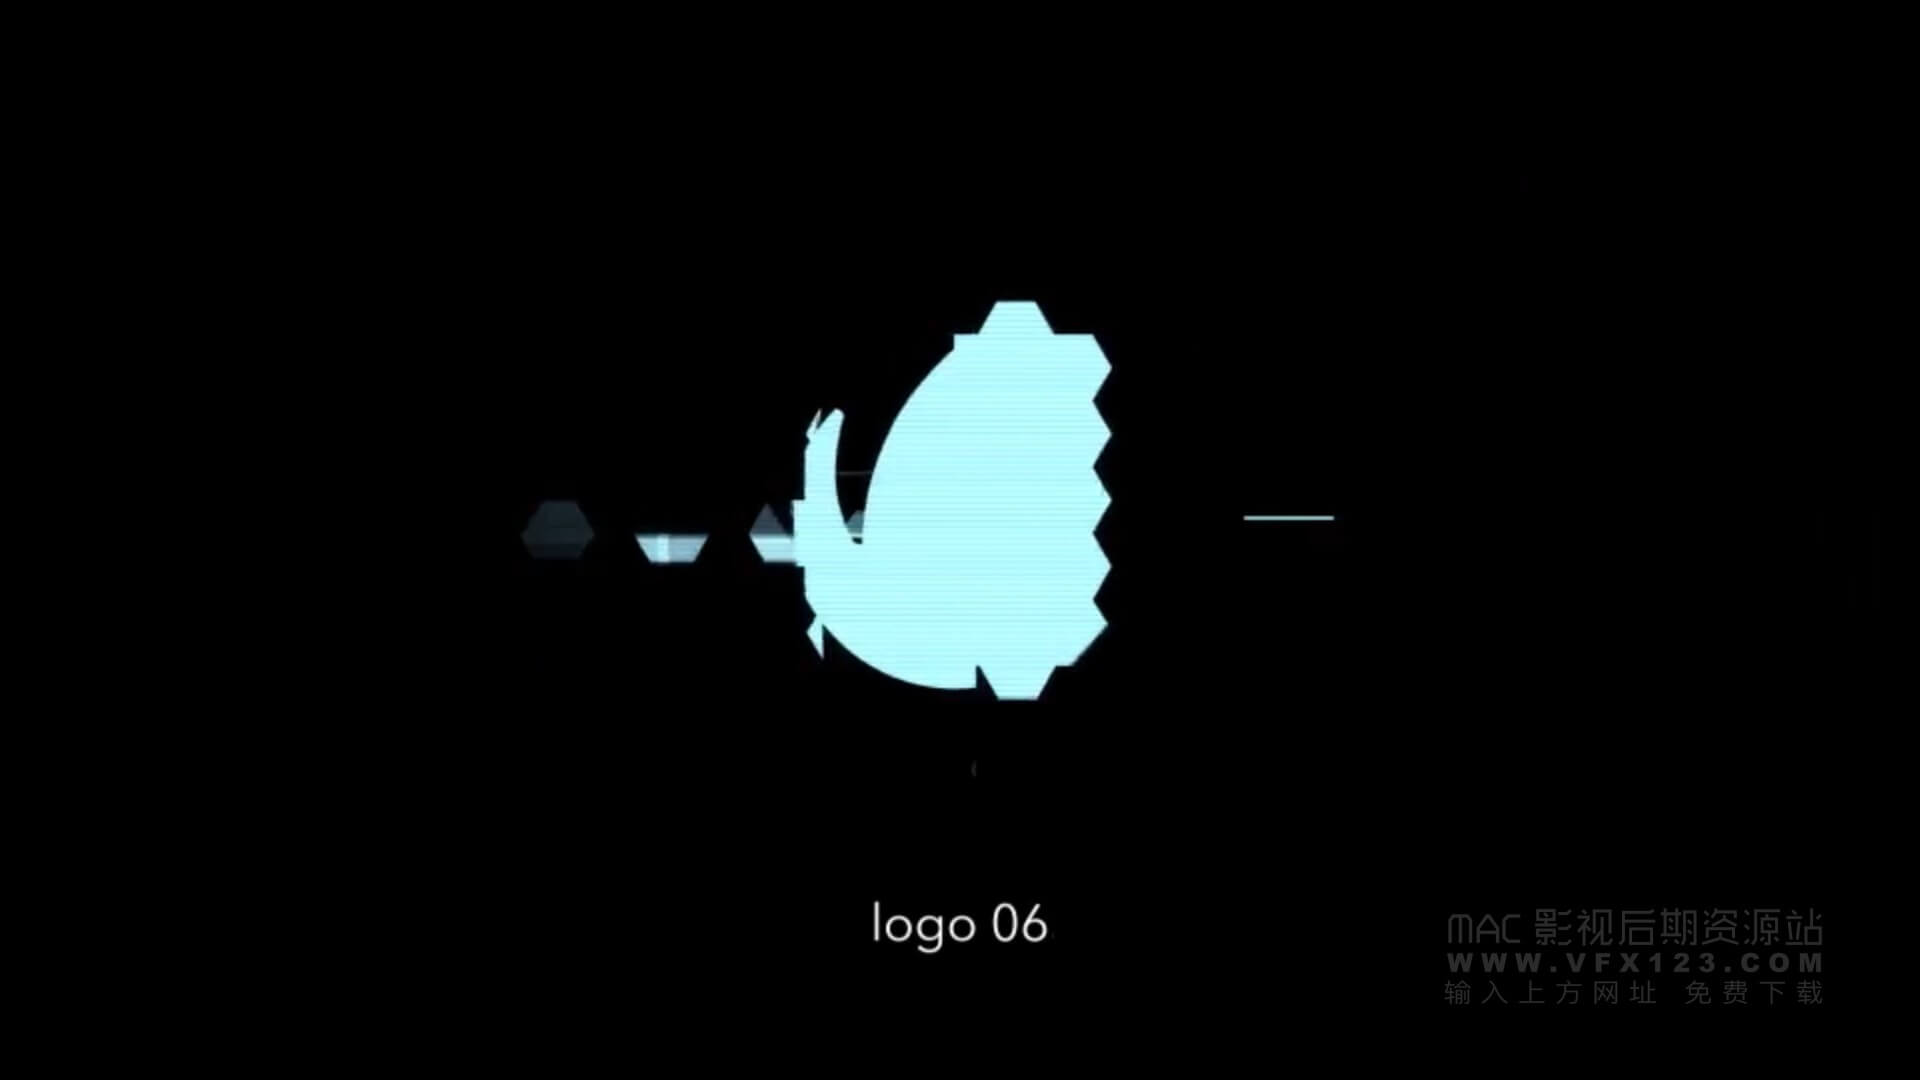 Fcpx主题模板 6种信号失真故障干扰LOGO展示 motion模板 Glitch Logos | MAC影视后期资源站